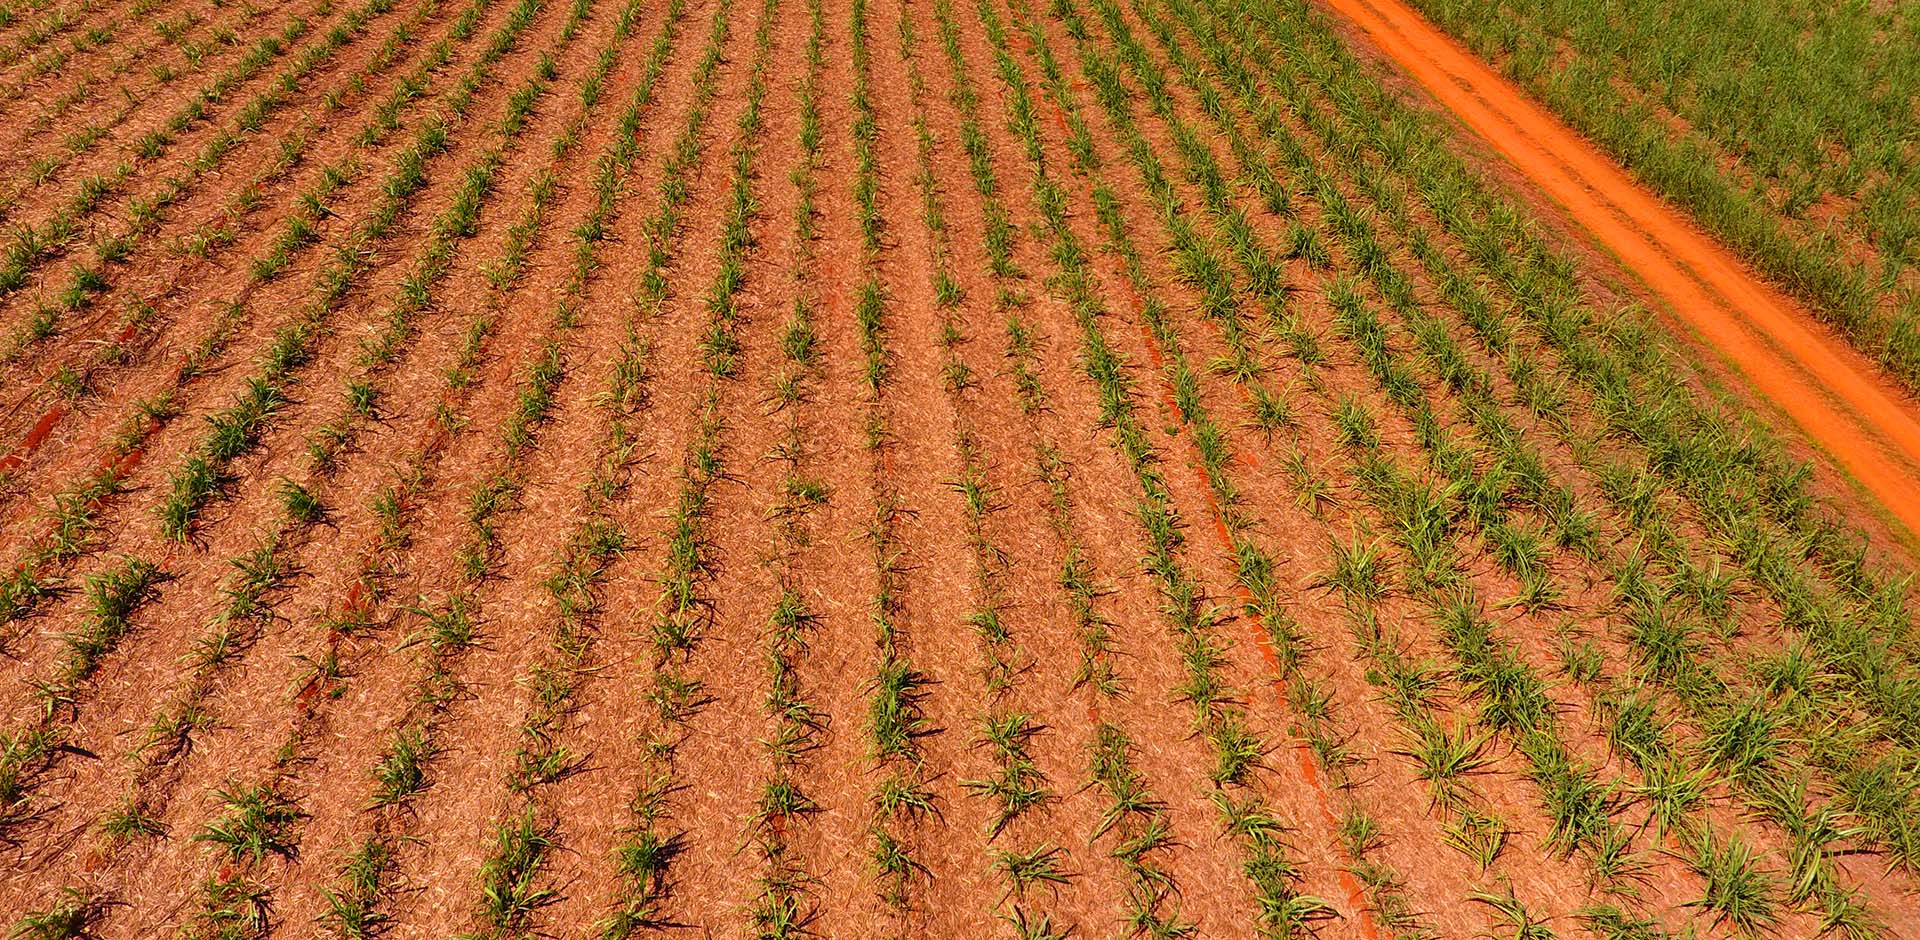 Aerial-plant-cane-red-dirt2.jpg